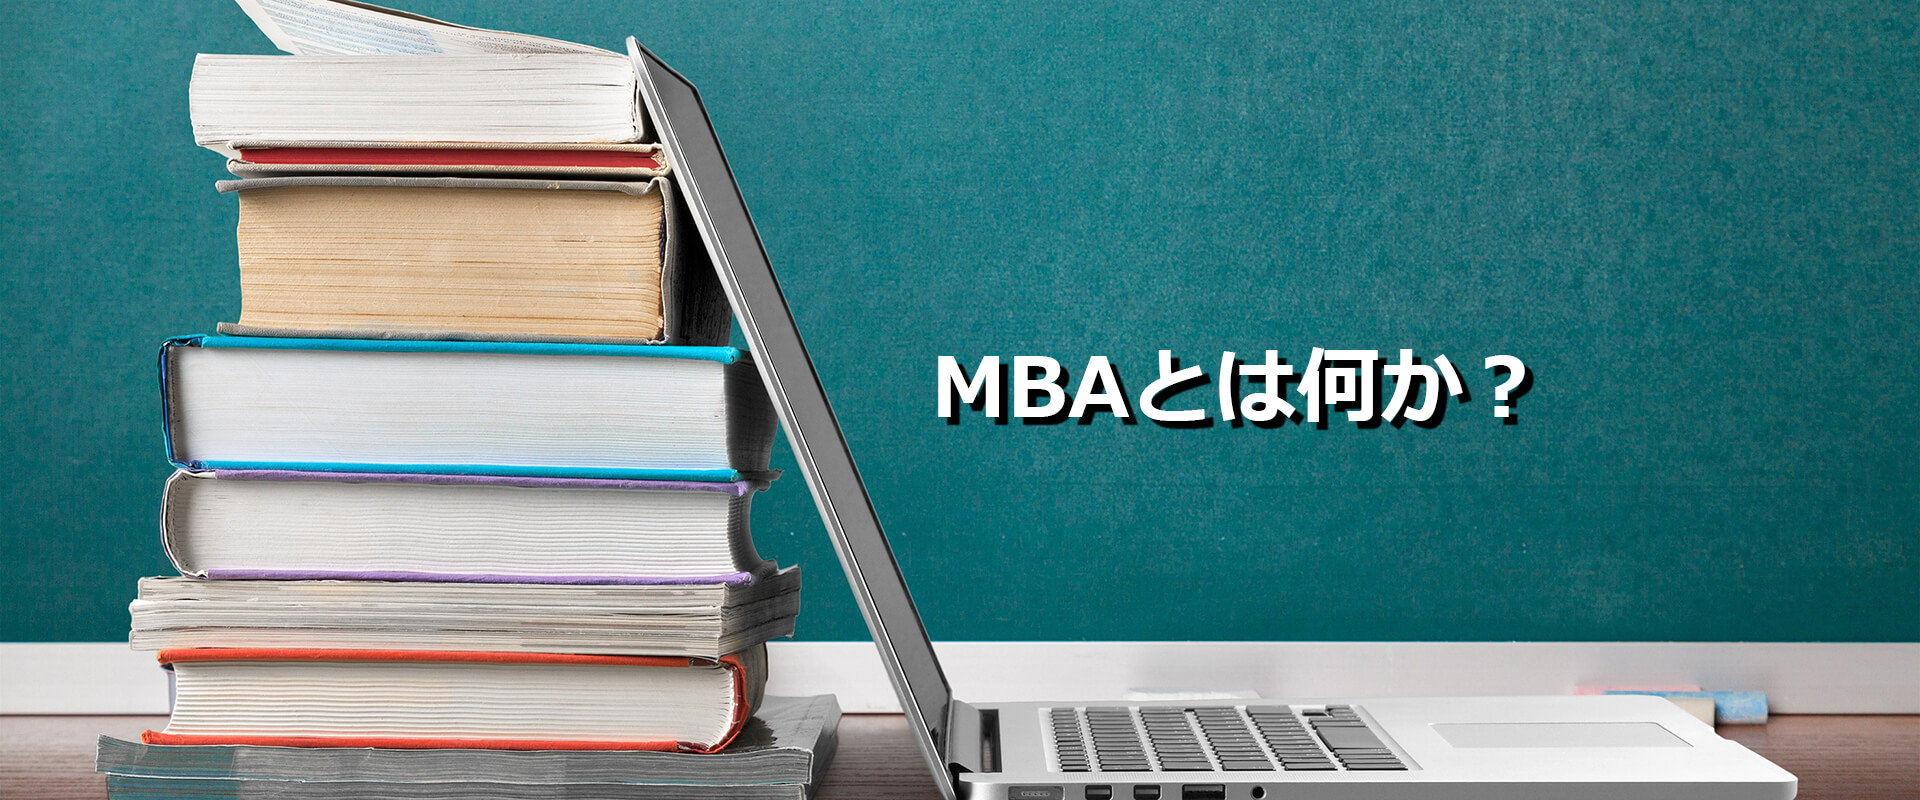 MBAとは何か？MBAの基礎知識